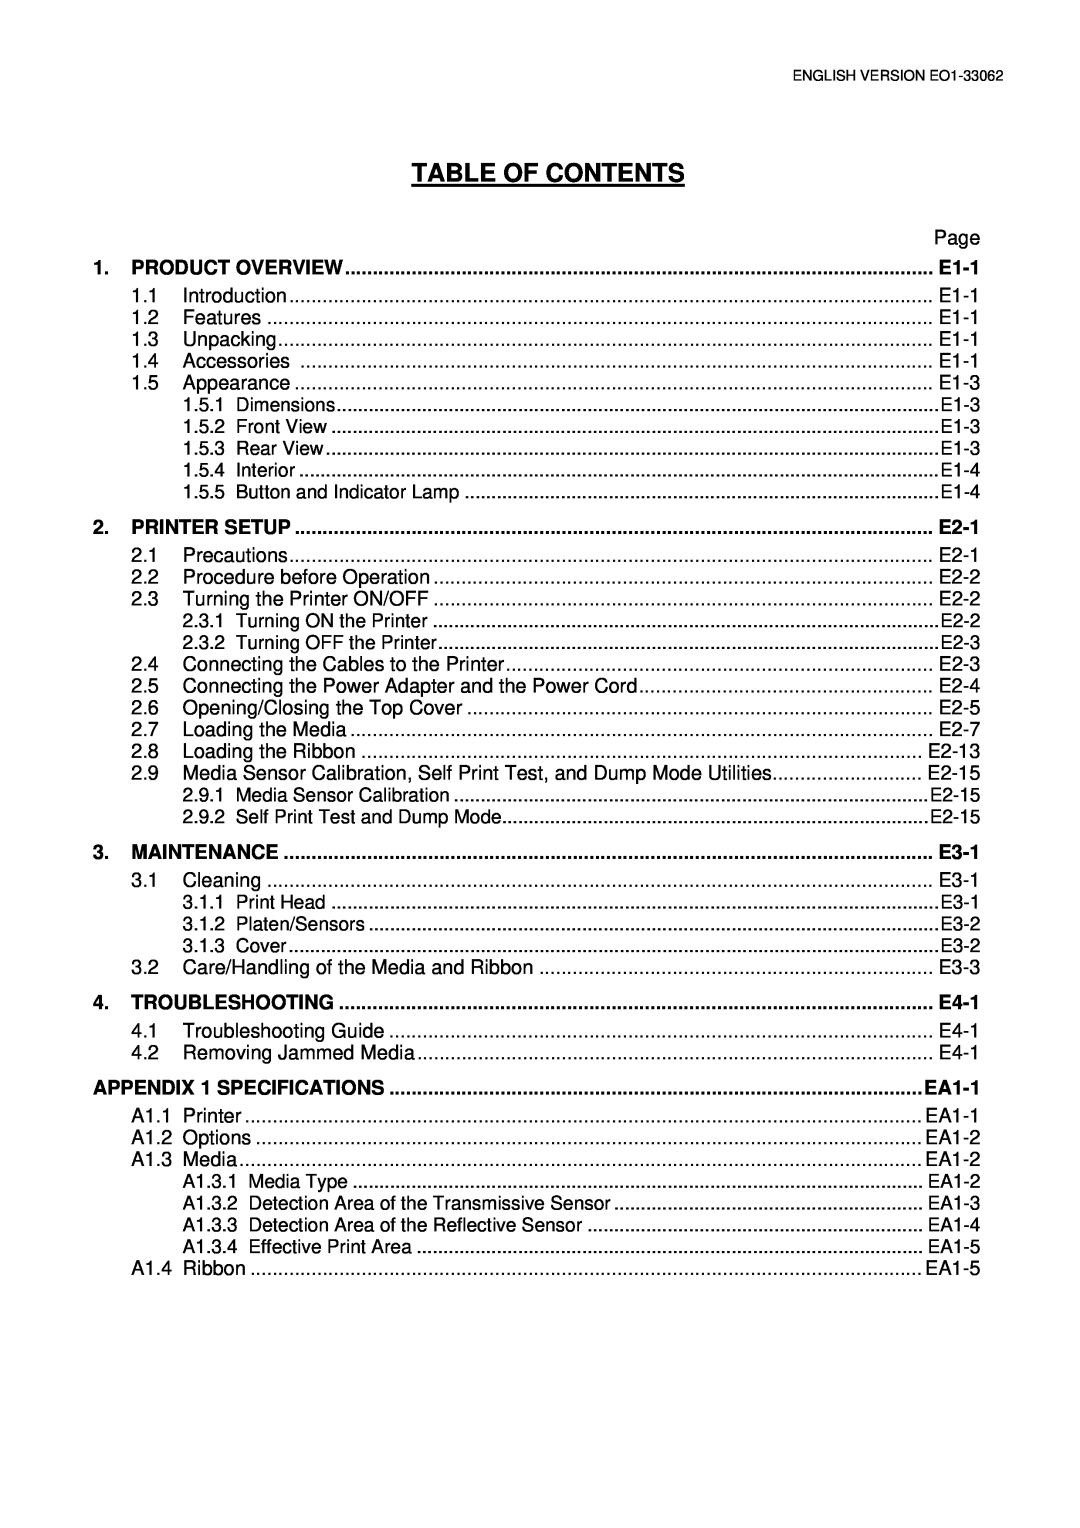 Toshiba B-SV4T Table Of Contents, Product Overview, E1-1, E2-1, Maintenance, E3-1, E4-1, APPENDIX 1 SPECIFICATIONS, EA1-1 